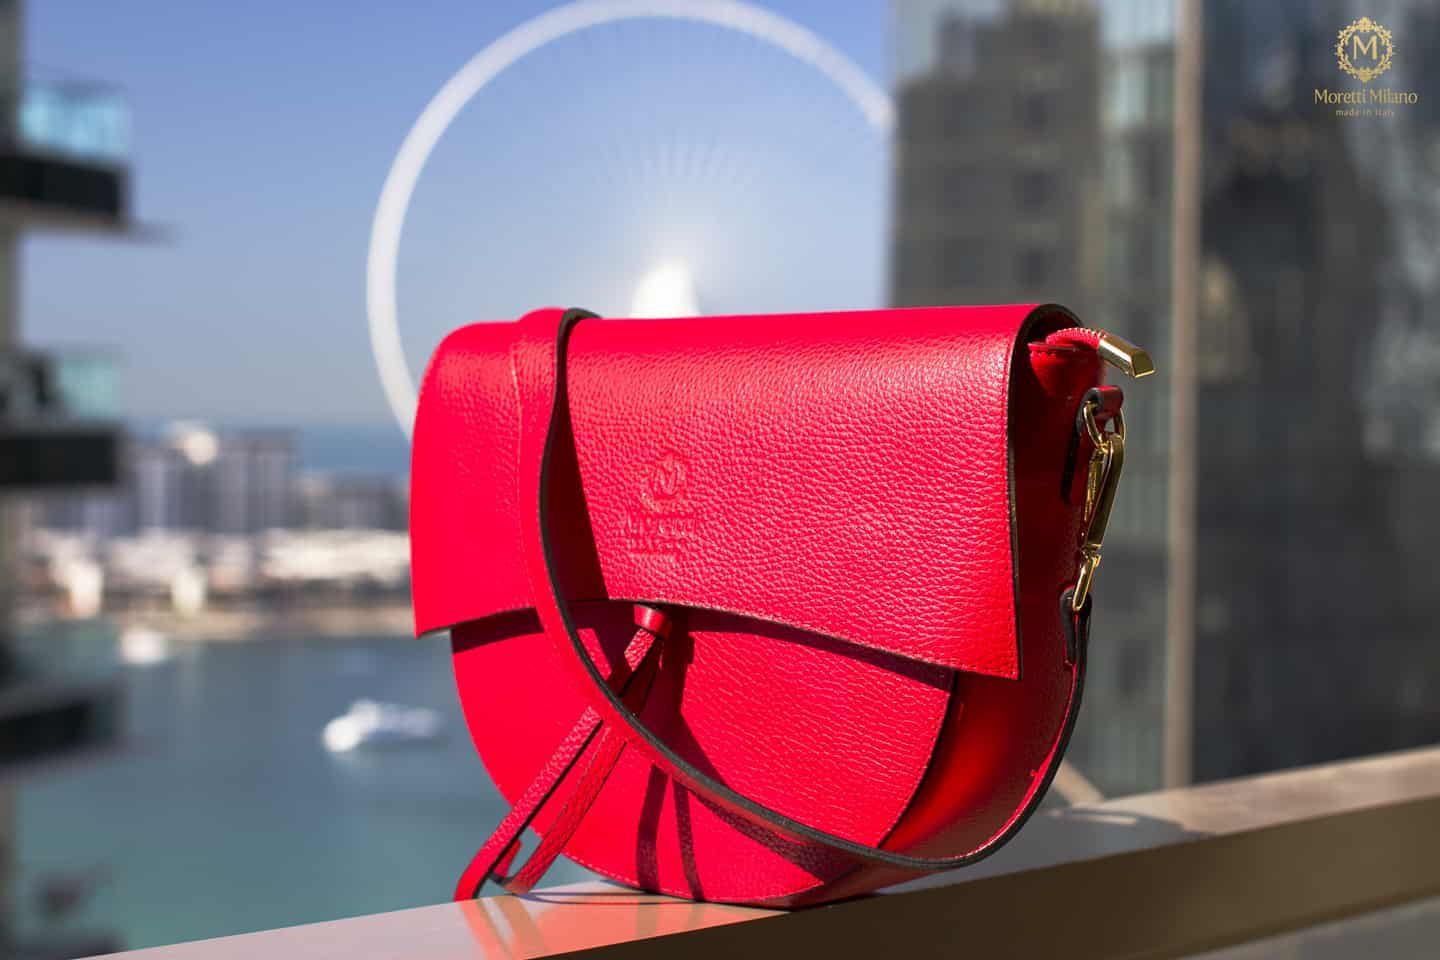 Adria handbag in luxury leather by Moretti Milano Italy 14459